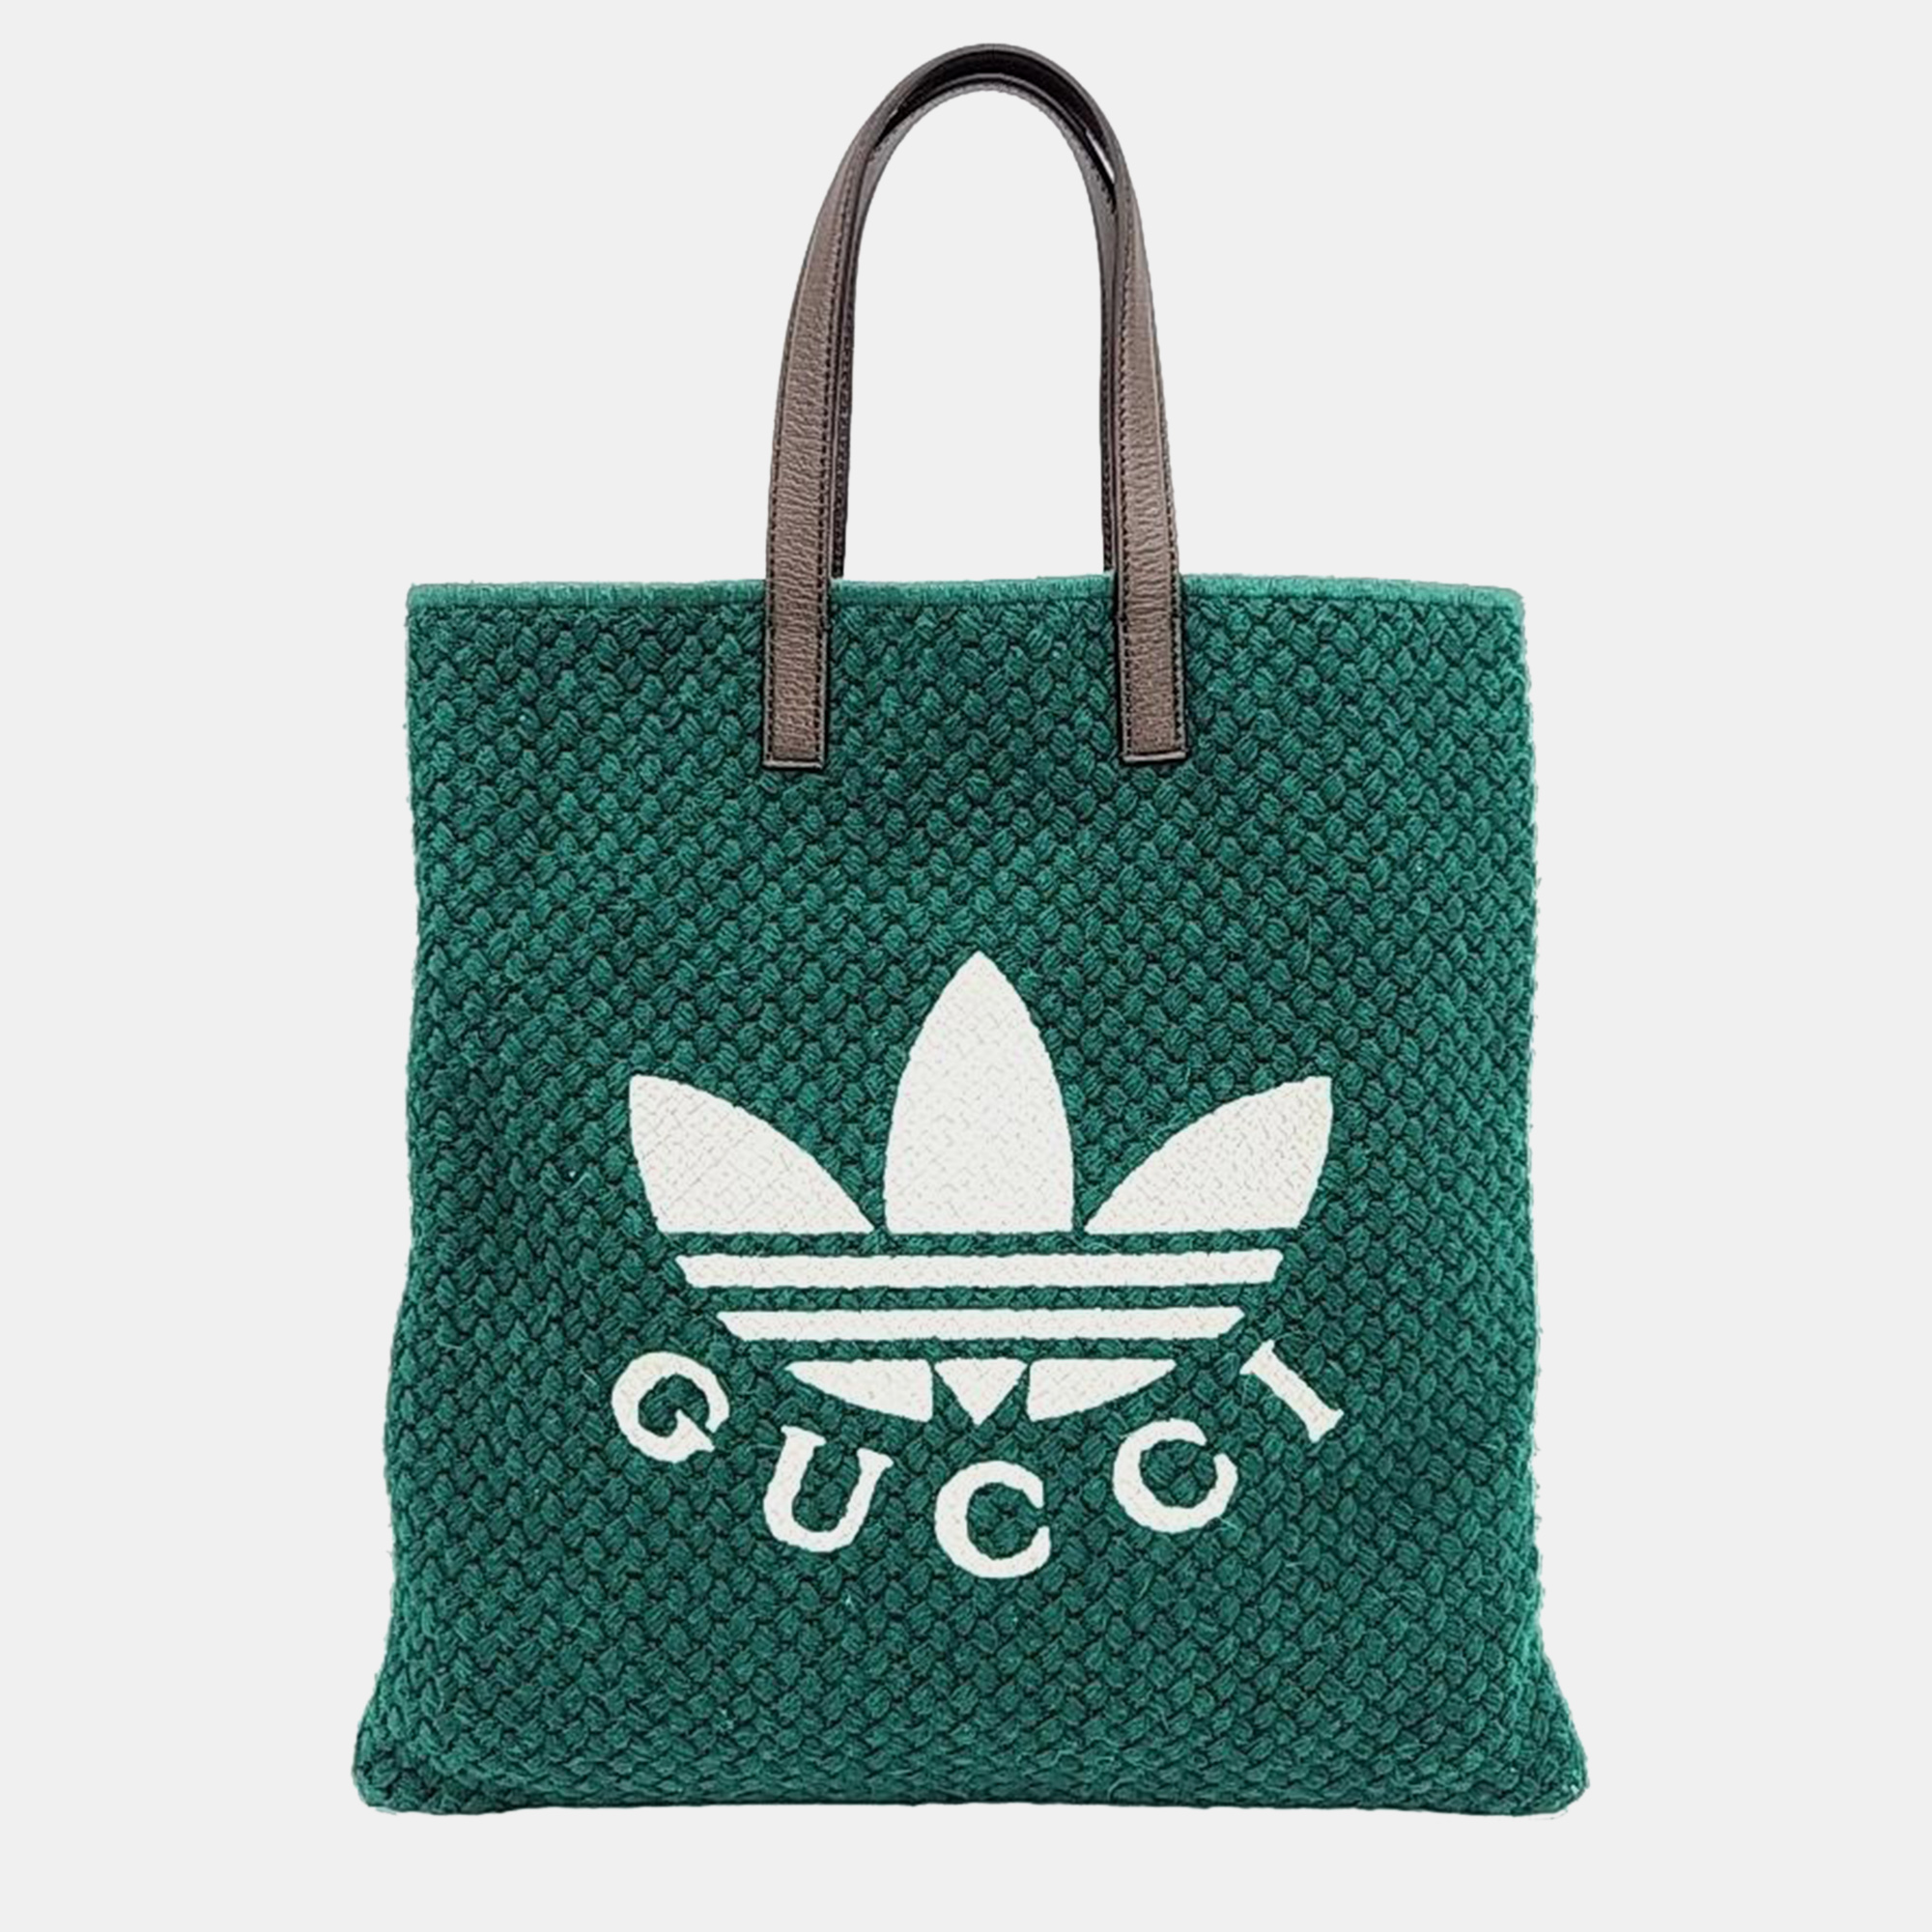 Gucci x adidas nit tote handbag (723026)